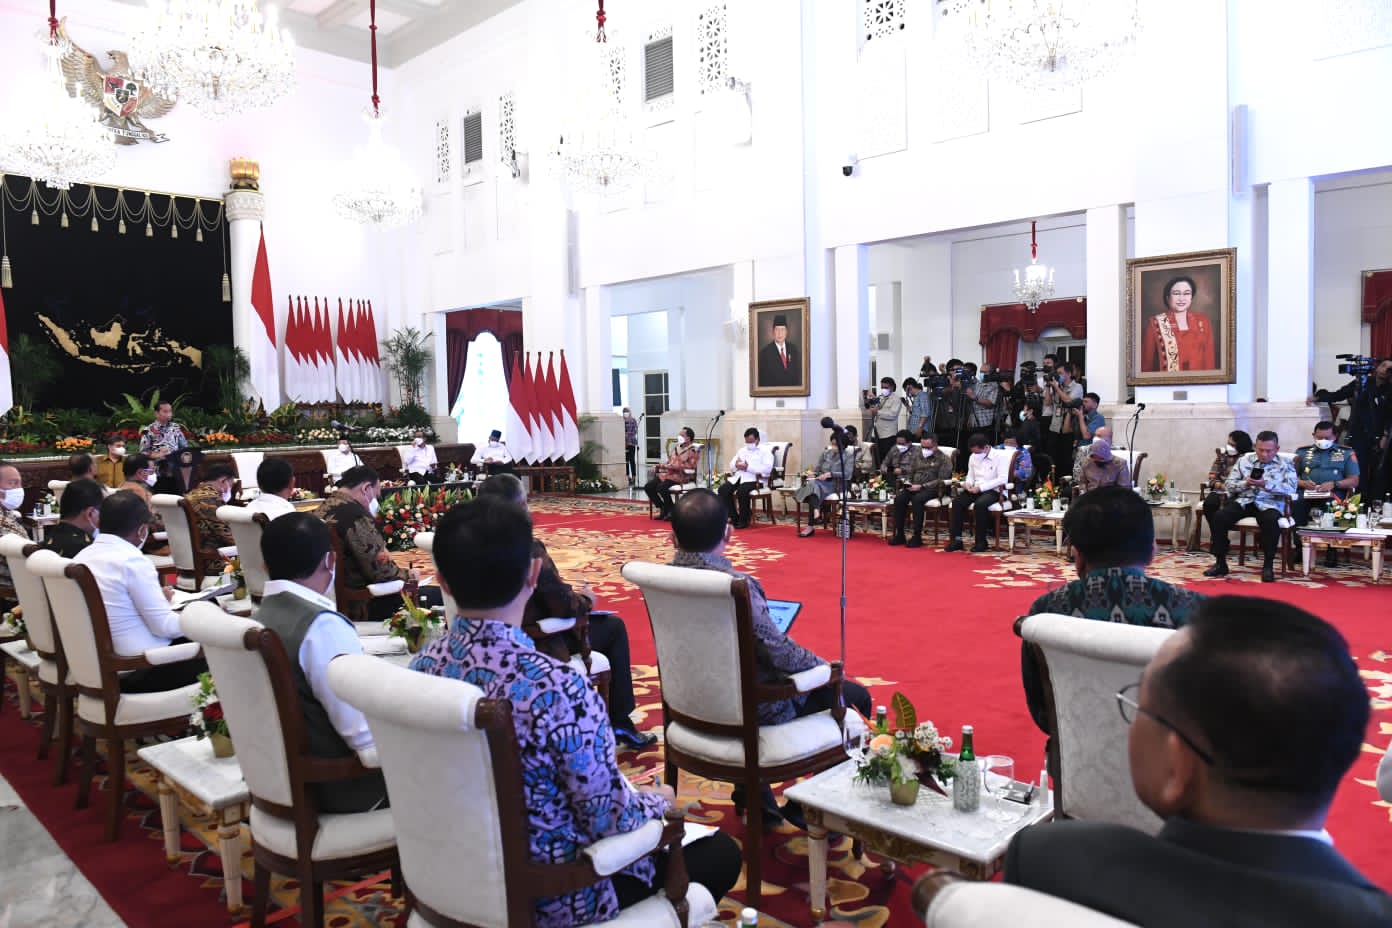 Presiden Jokowi Tegaskan Jajaran ASN Hindari Sifat Hedonisme